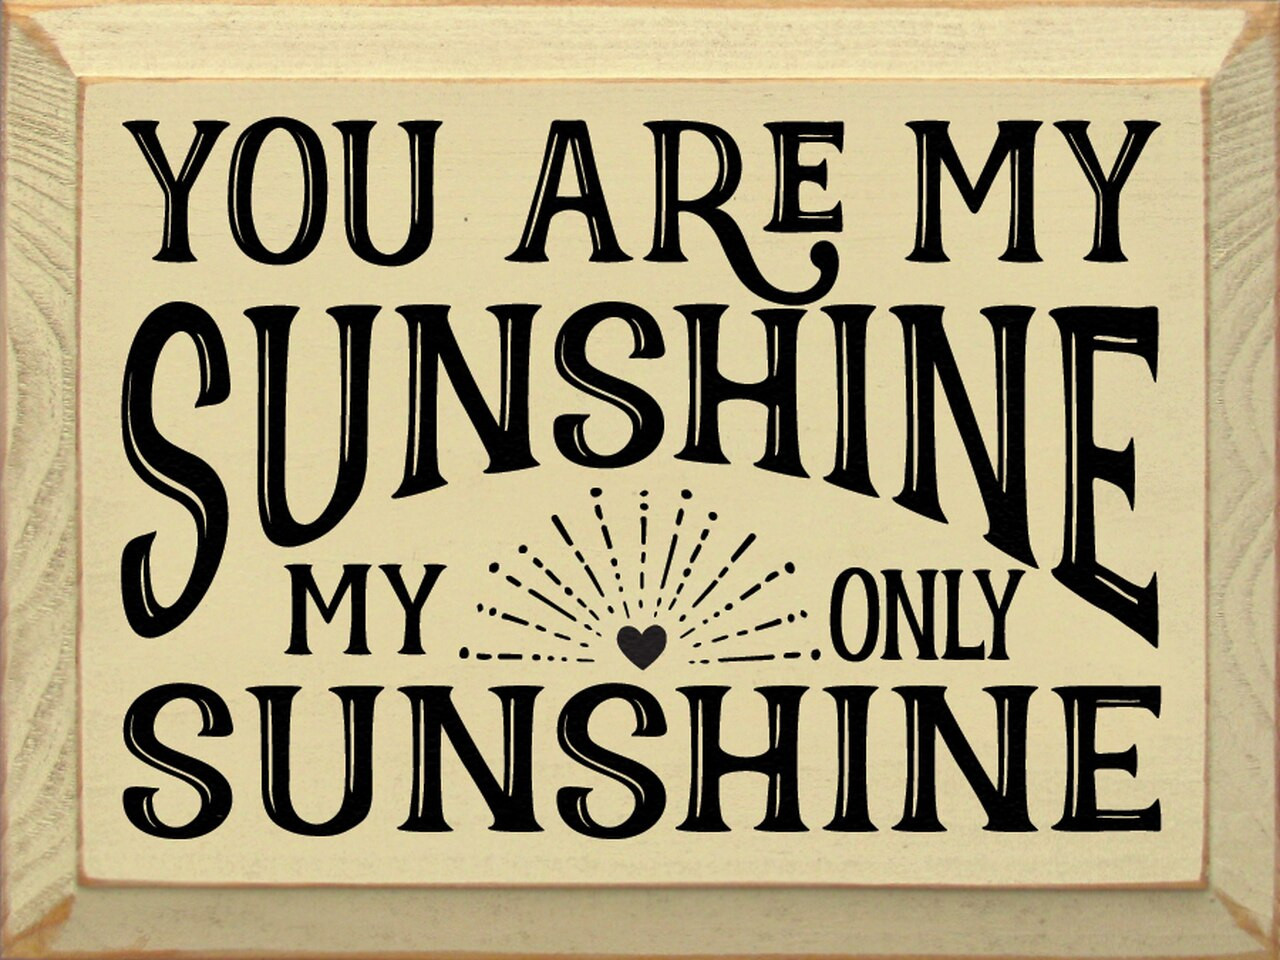  You are My Sunshine My Only Sunshine Lyrics Framed